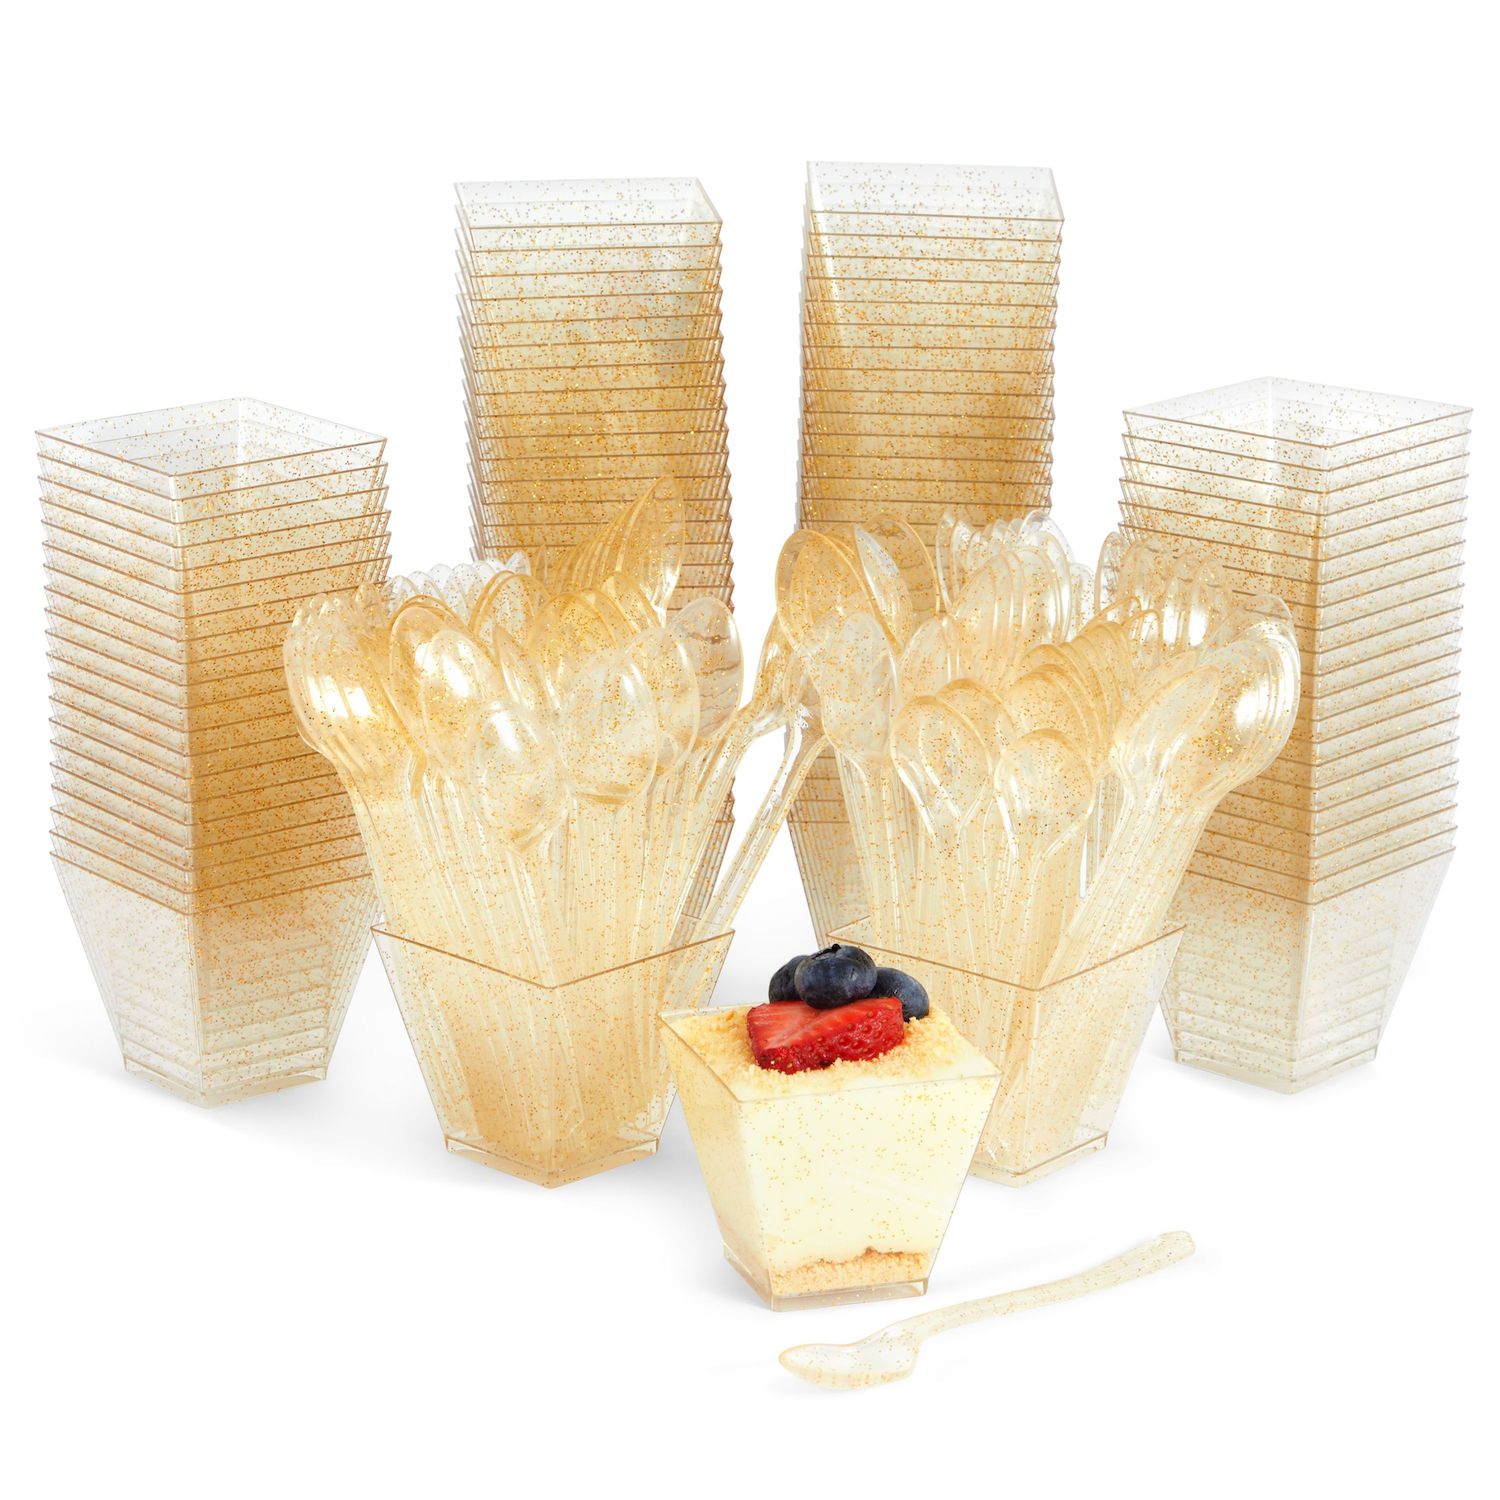 120 Pieces of Gold Glitter Mini Dessert Cups with Spoons, Plastic  Disposable Dessert Cups 3oz for Parfait, Shooters, Mousse, Appetizers,  Samples, Treats, Serves 60